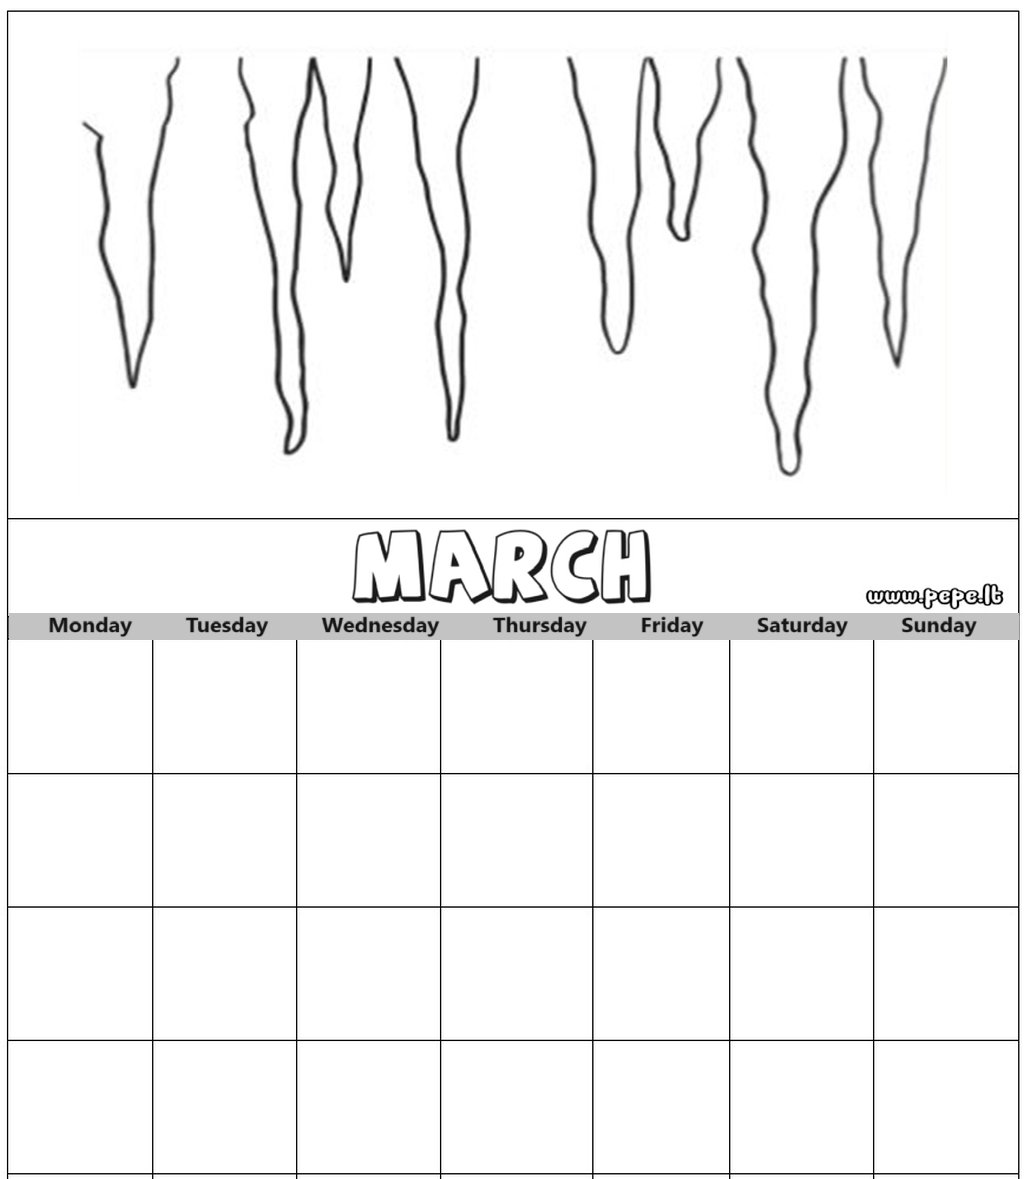 March calendar coloring